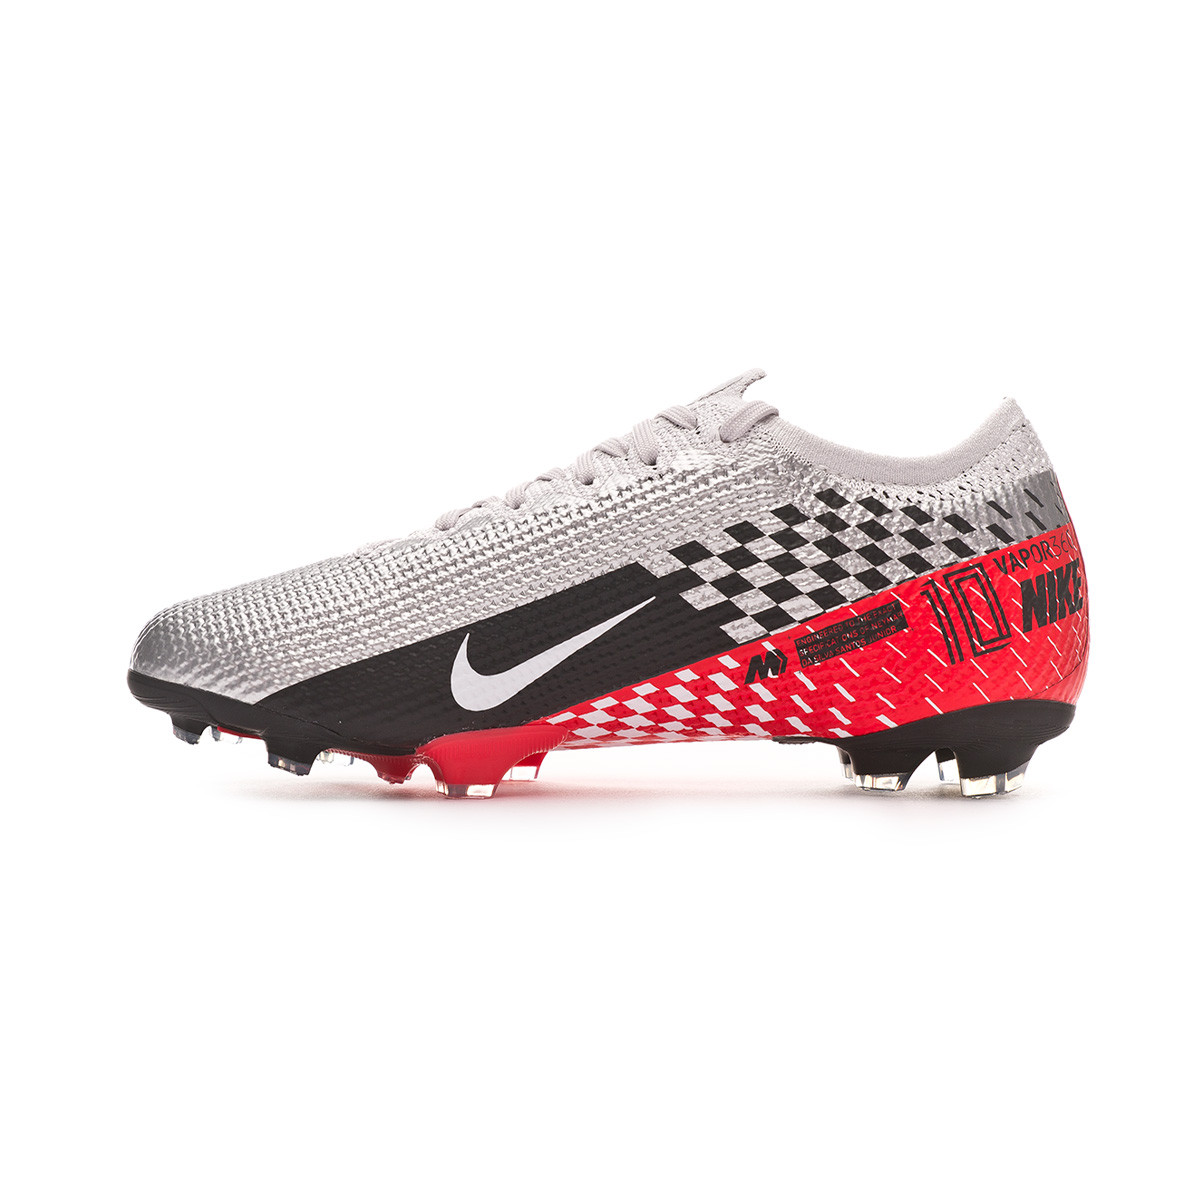 Football Boots Nike Kids Mercurial Vapor XIII Elite FG Neymar Jr  Chrome-Black-Red orbit-Platinum tint - Football store Fútbol Emotion